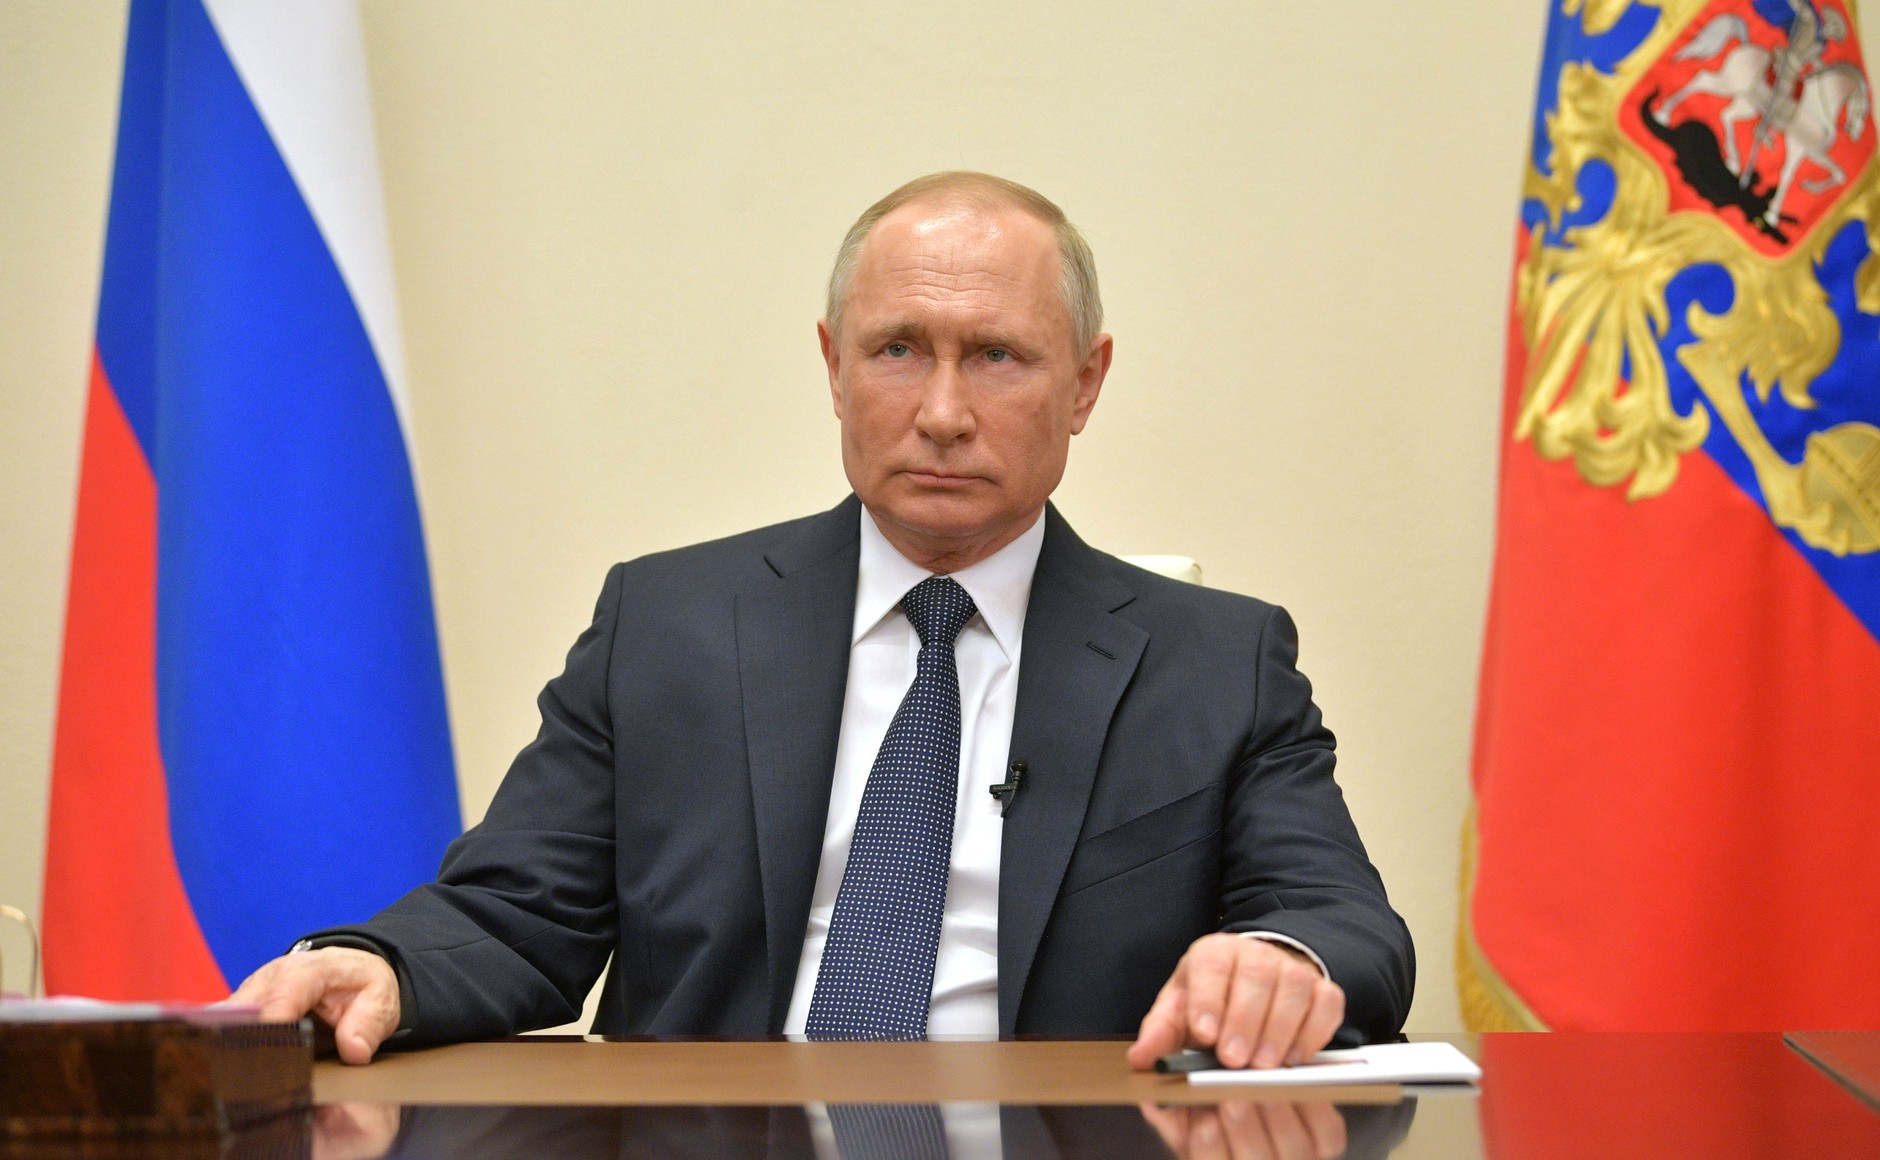 Putin sitter ved en pult med det russiske flagget bak seg